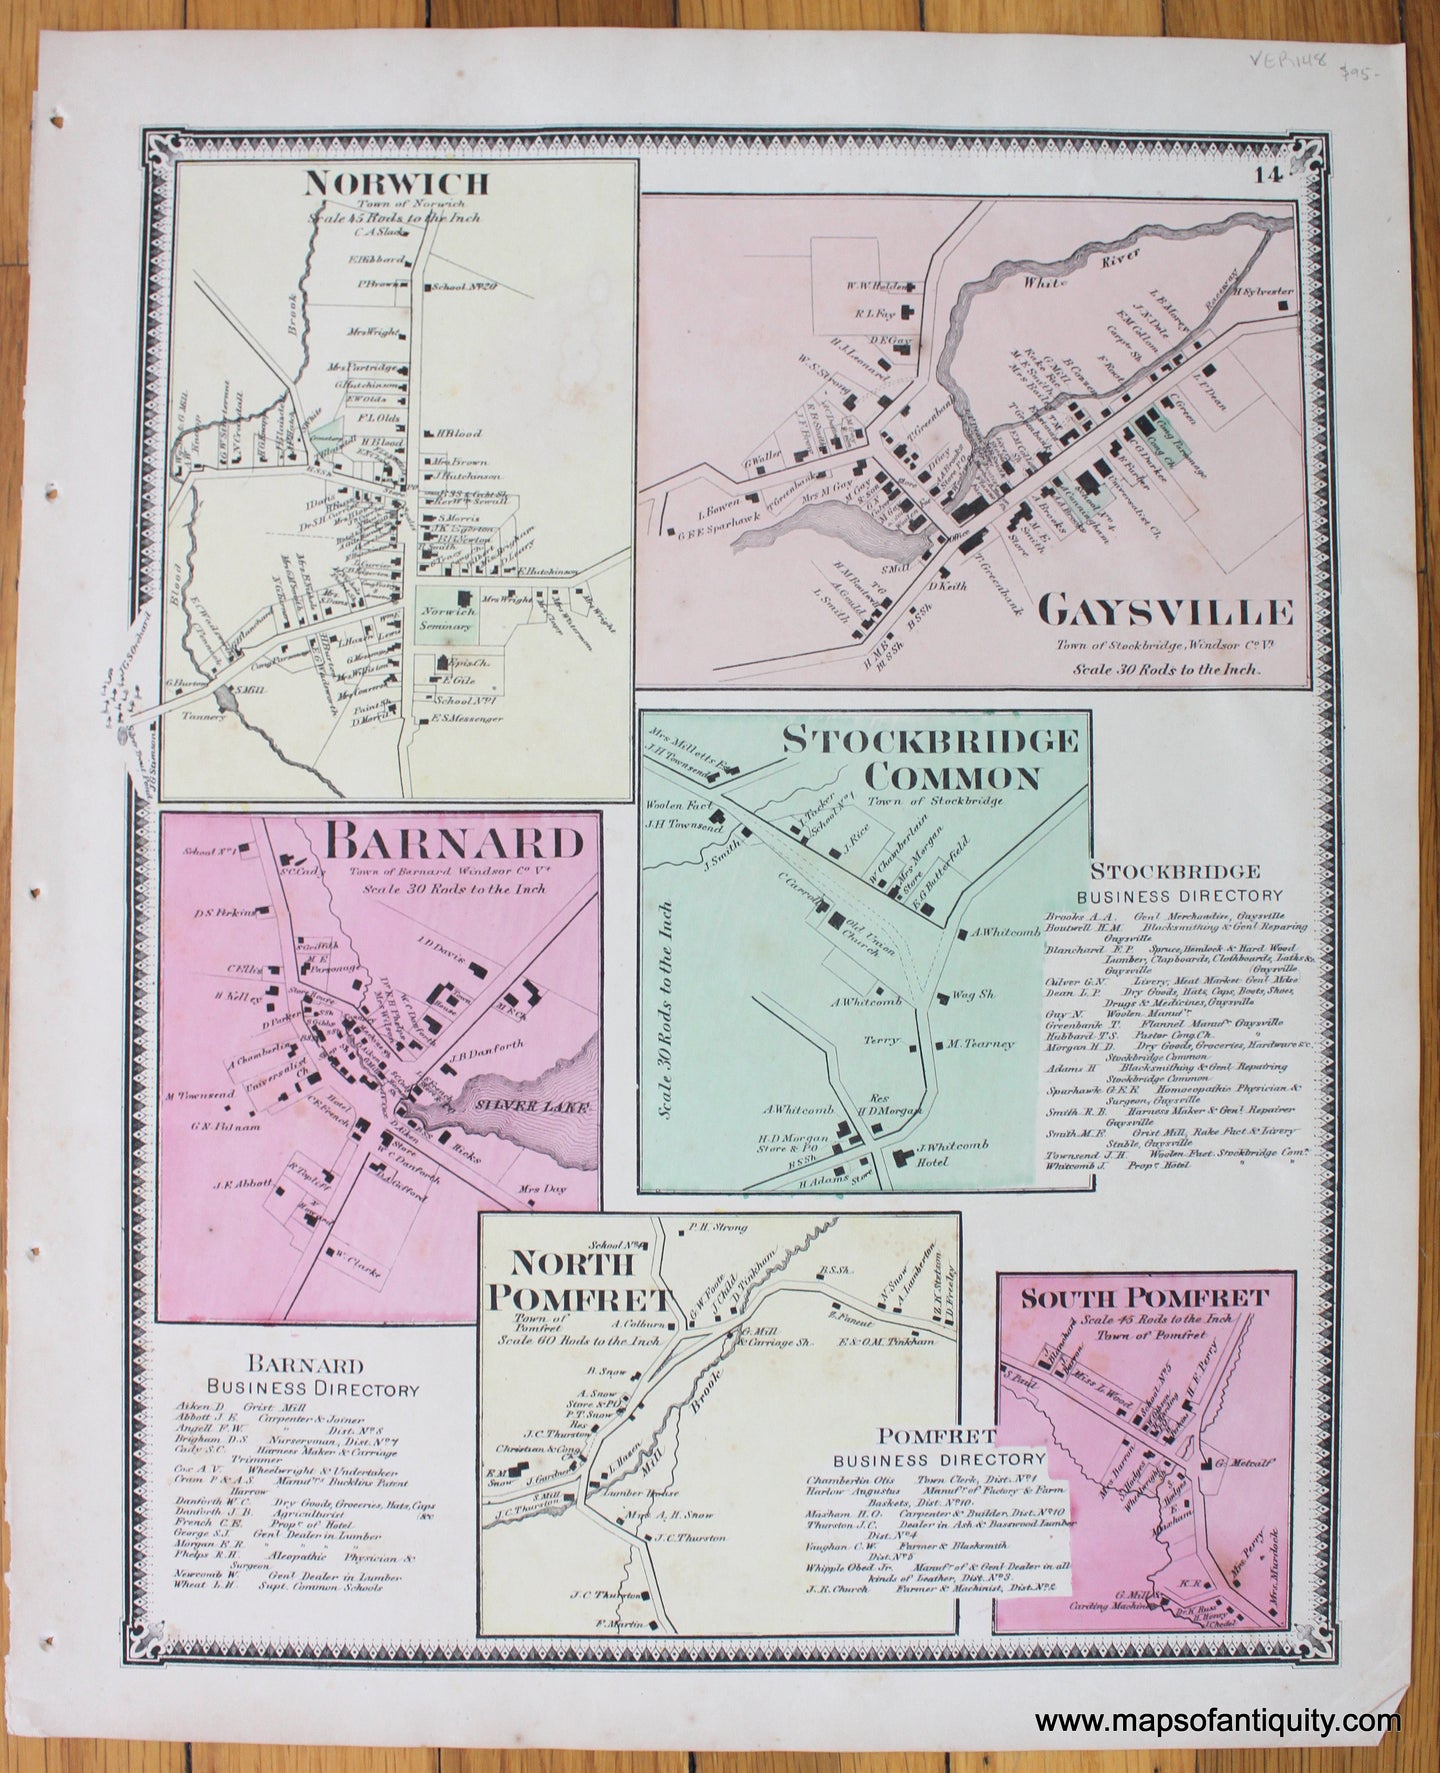 Antique-Hand-Colored-Map-Norwich-N.-Pomfret-S.-Pomfret-Stockbridge-Common-Barnard-Gayville-VT-1869-Beers-1800s-19th-century-Maps-of-Antiquity